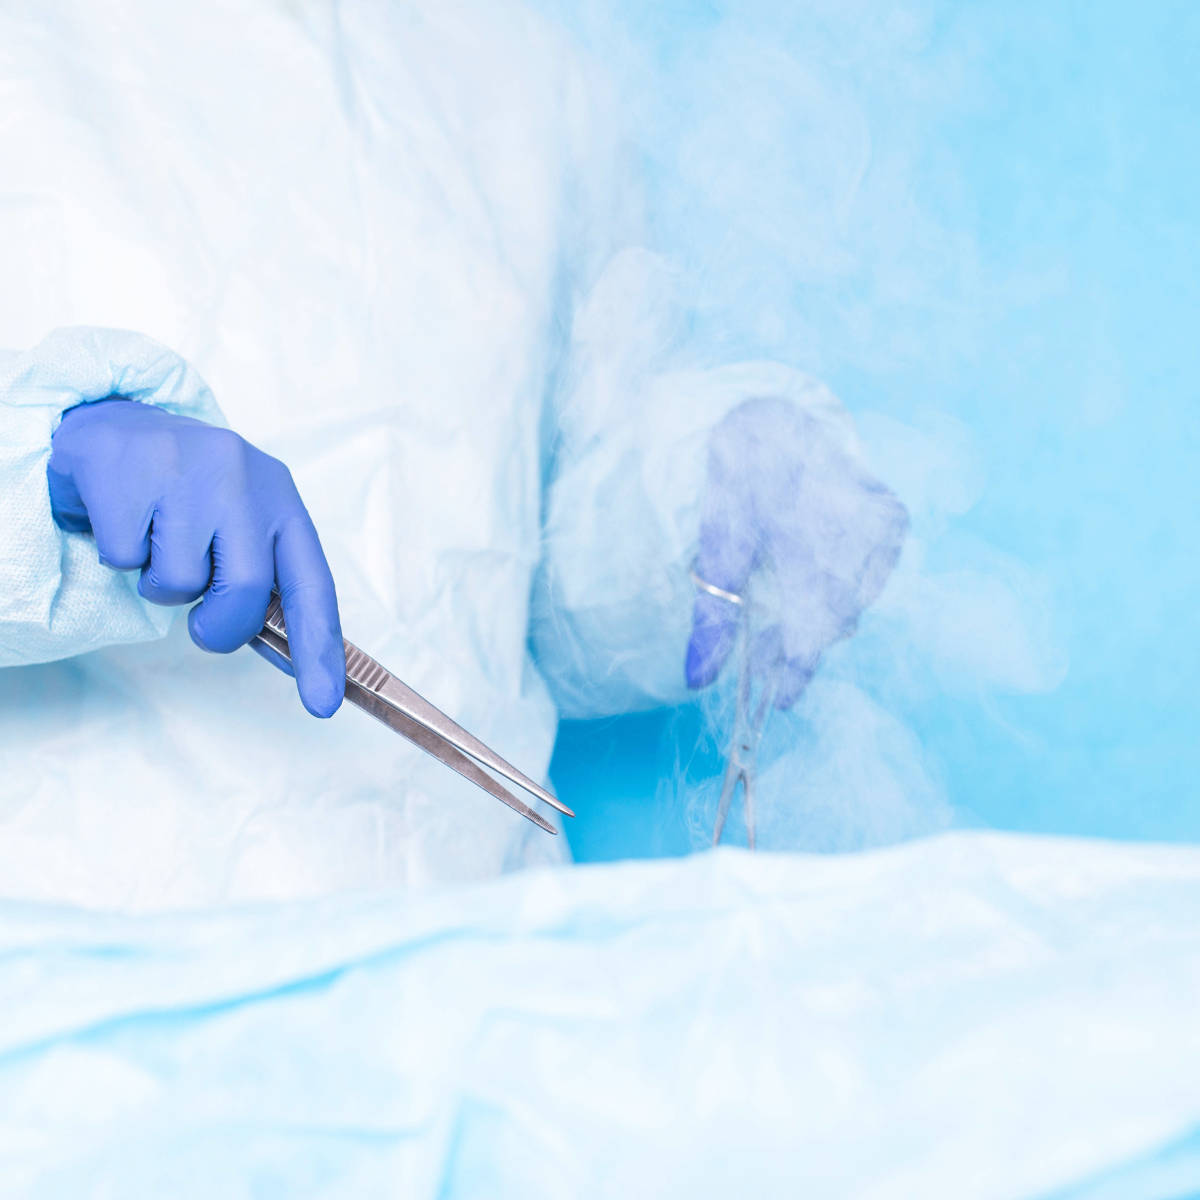 Dr. cryosurgeon performs a modern operation using liquid nitrogen